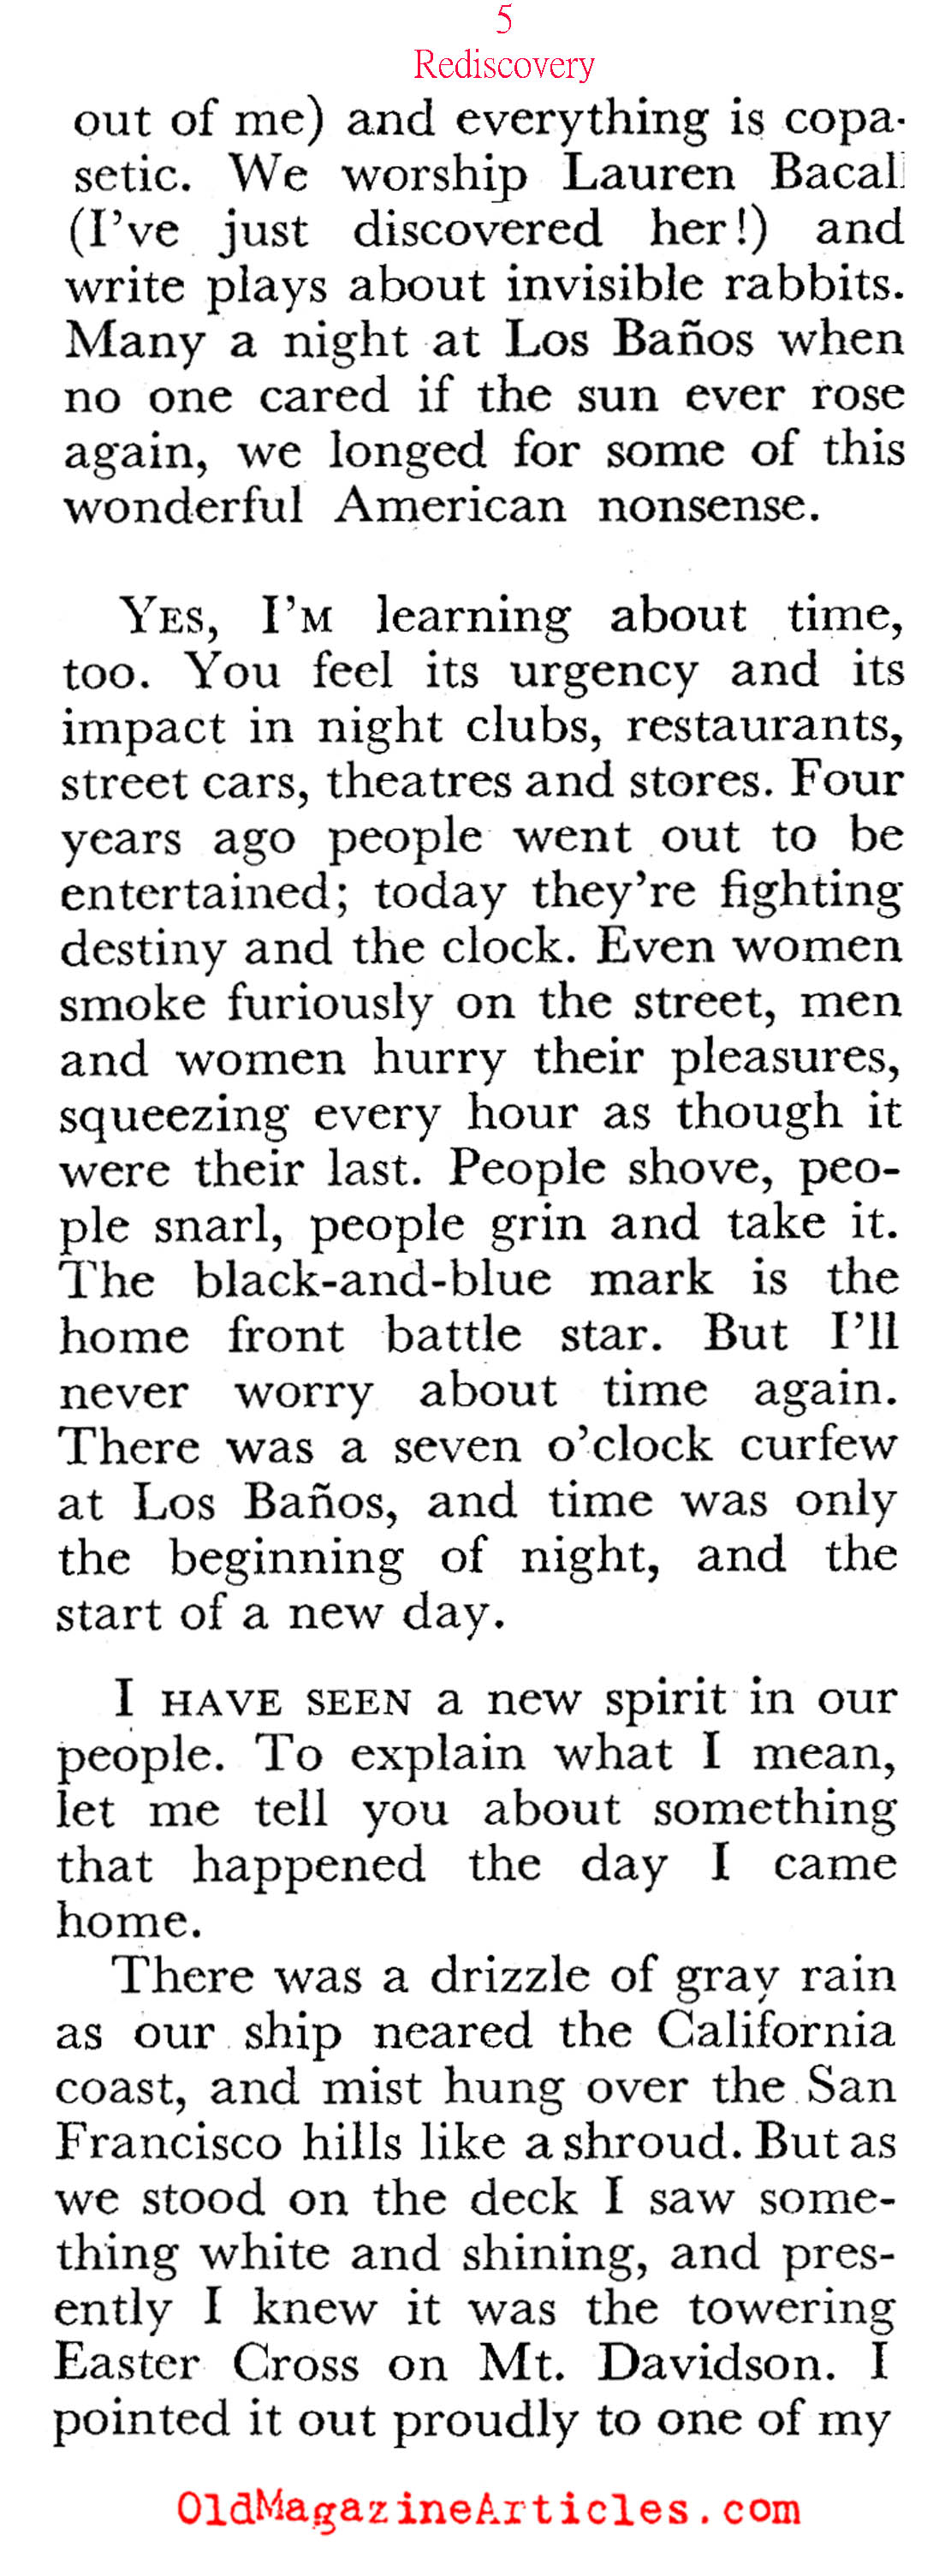 The Returned P.O.W. (Coronet Magazine, 1945)